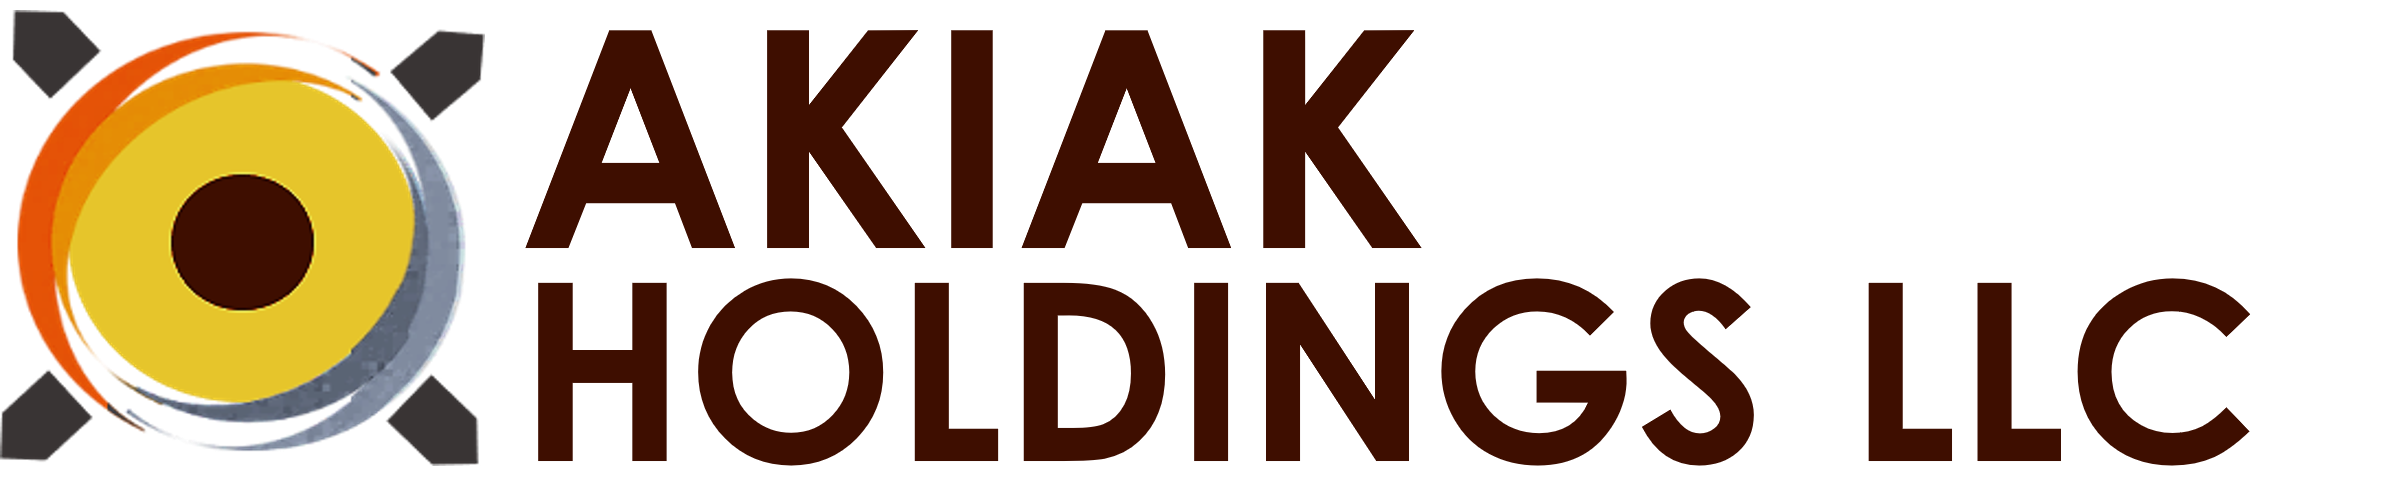 Akiak Holdings, LLC